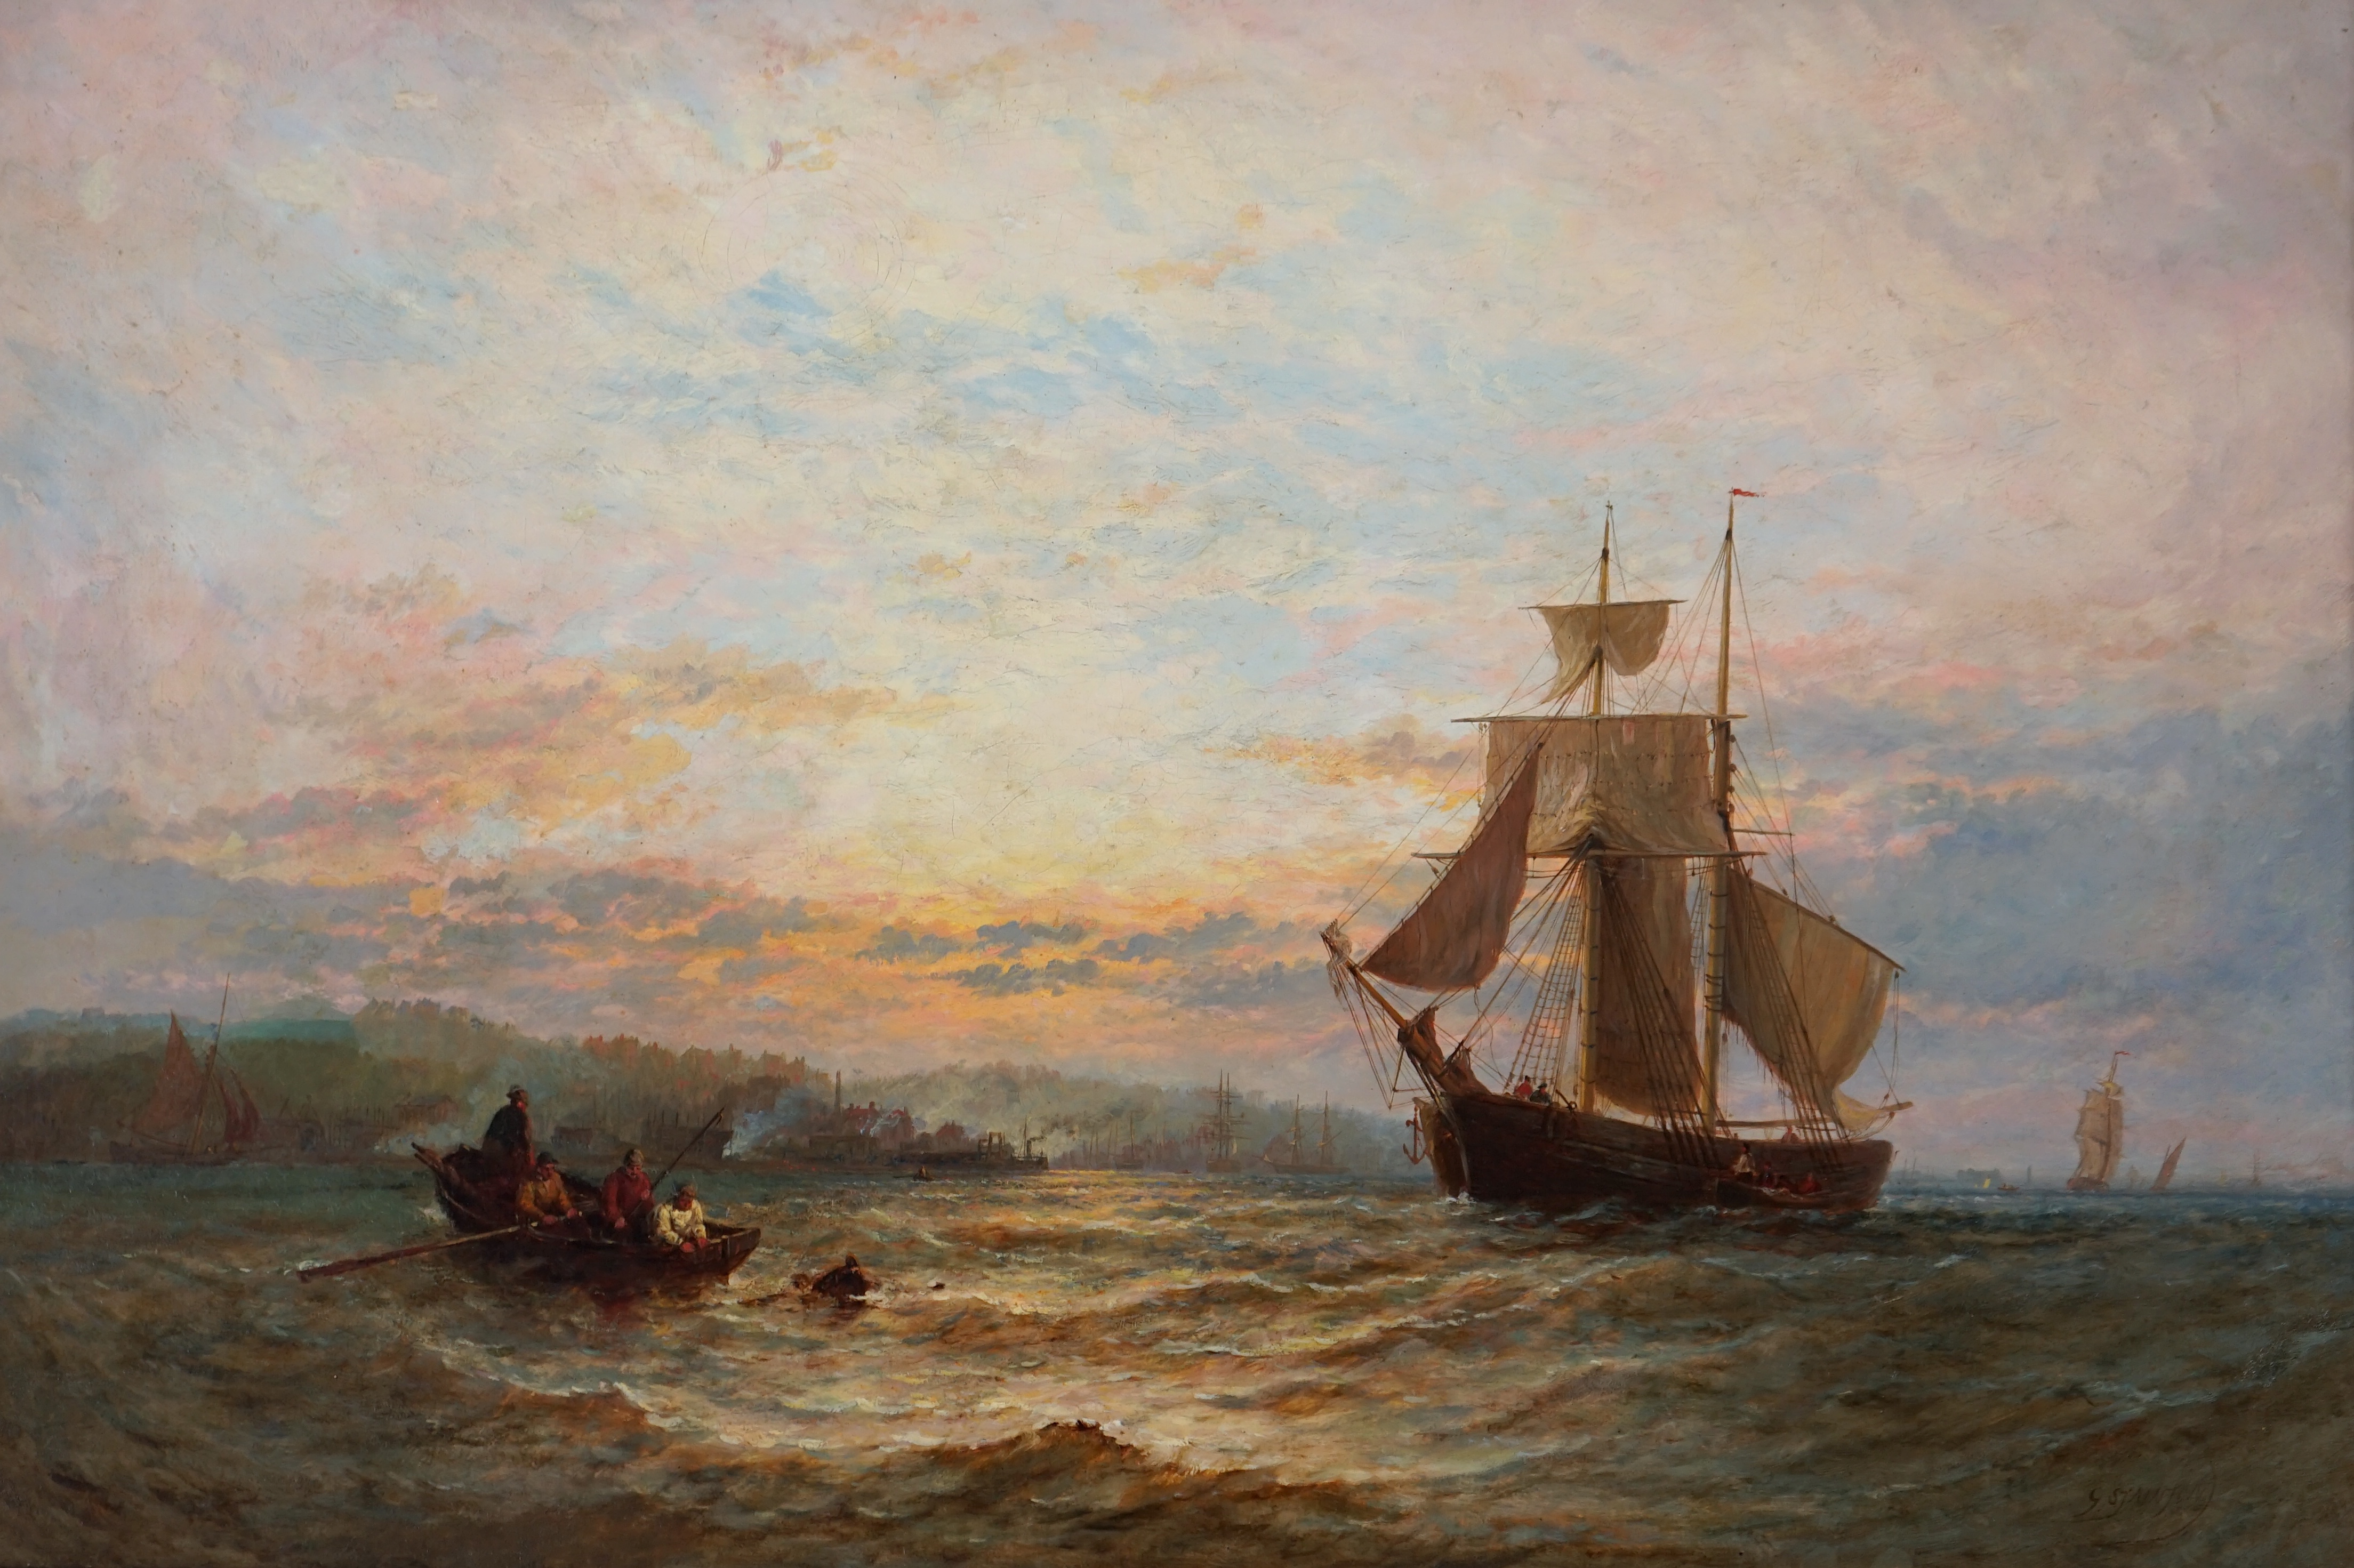 George Stainton (British, fl. 1860-1890), Shipping in a calm sea at dawn, oil on canvas, 60 x 90cm